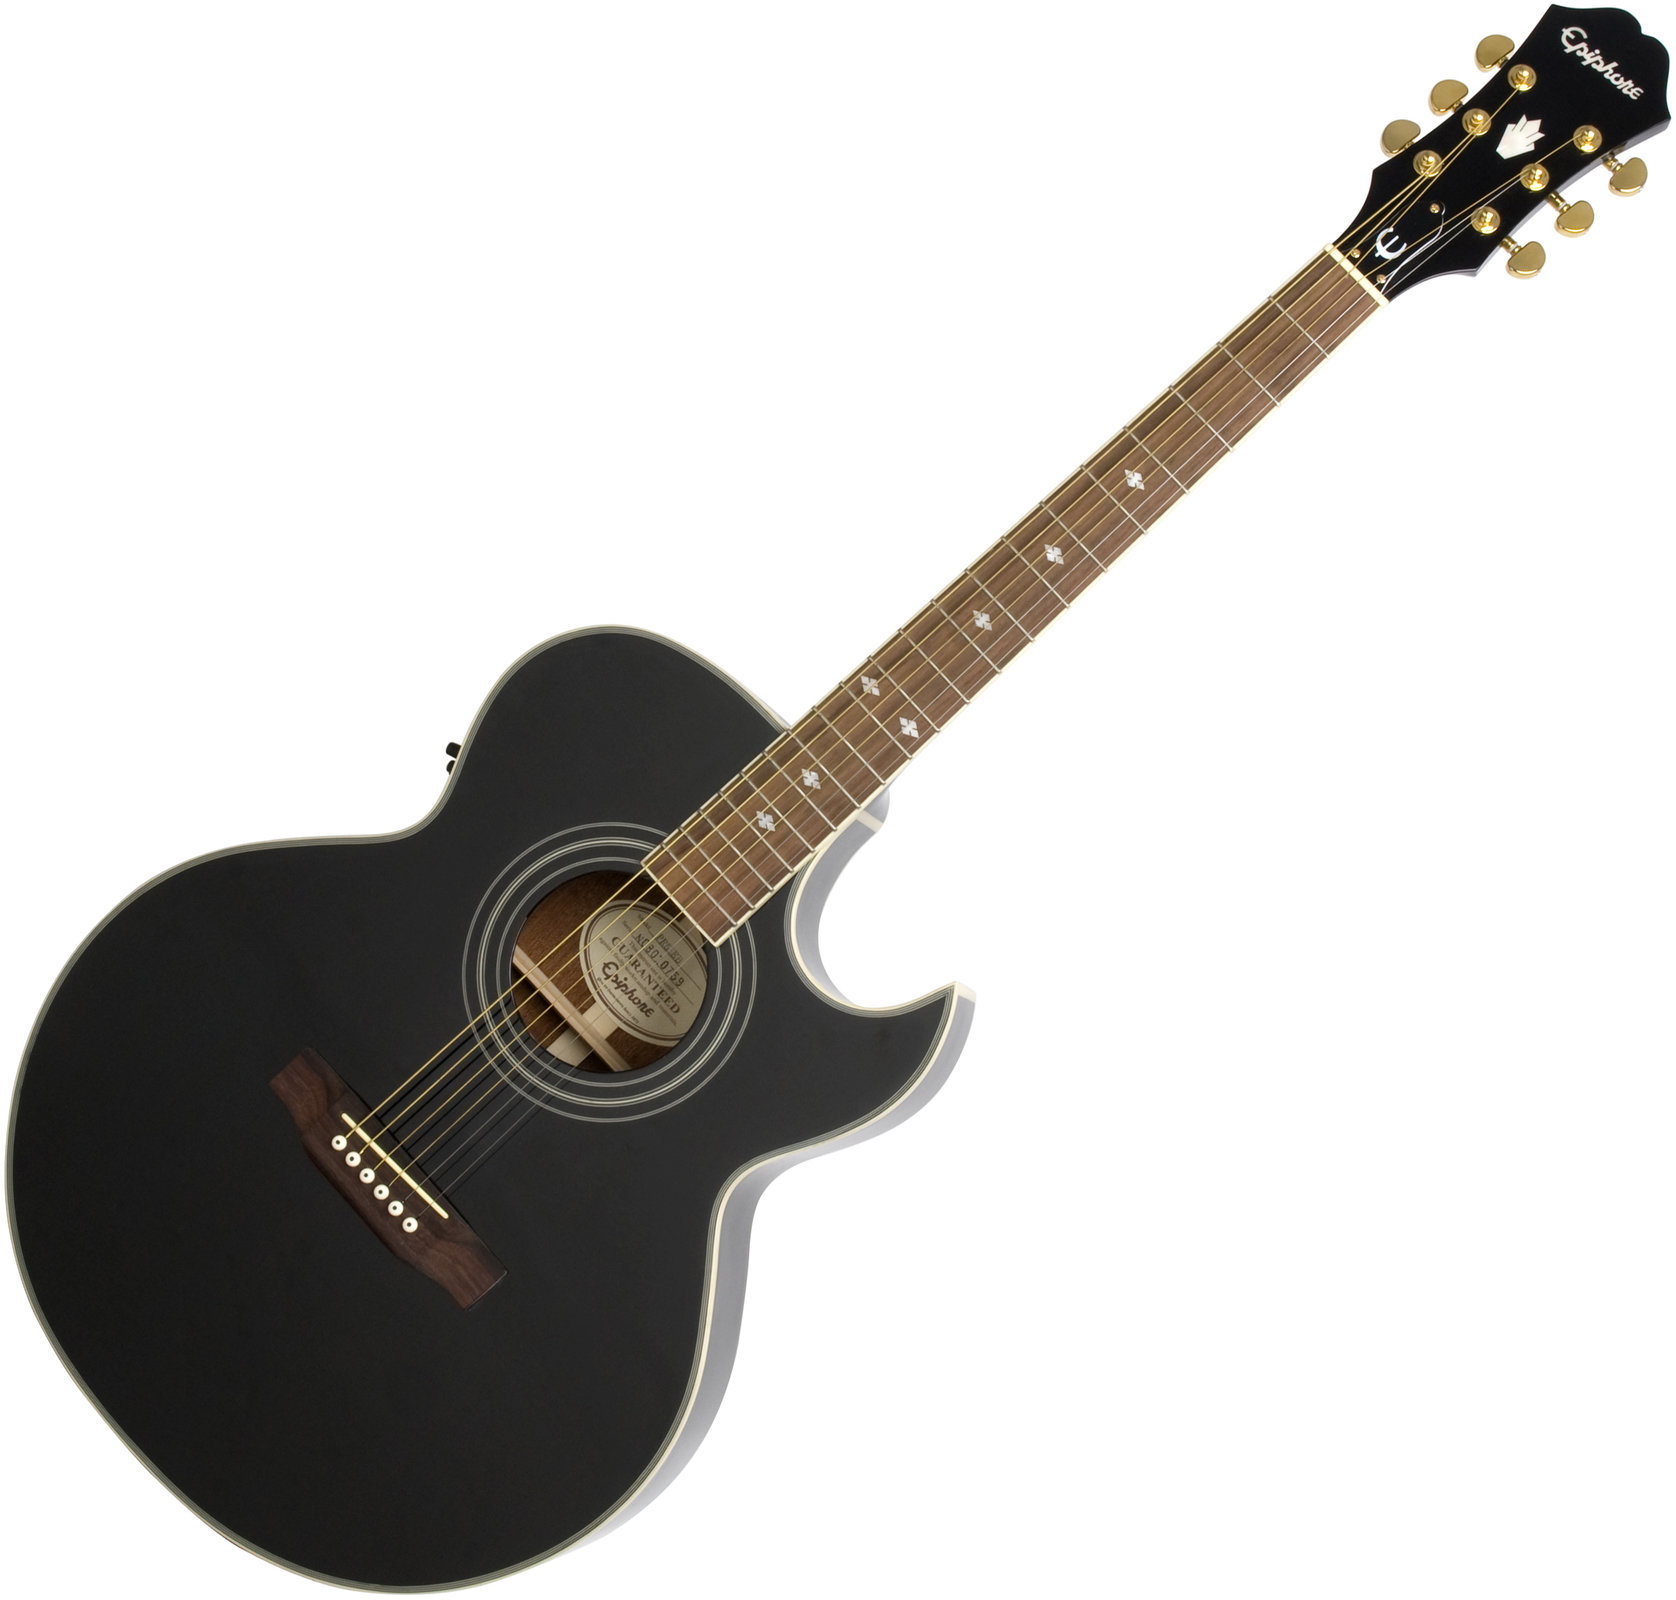 Jumbo elektro-akoestische gitaar Epiphone PR5-E EB